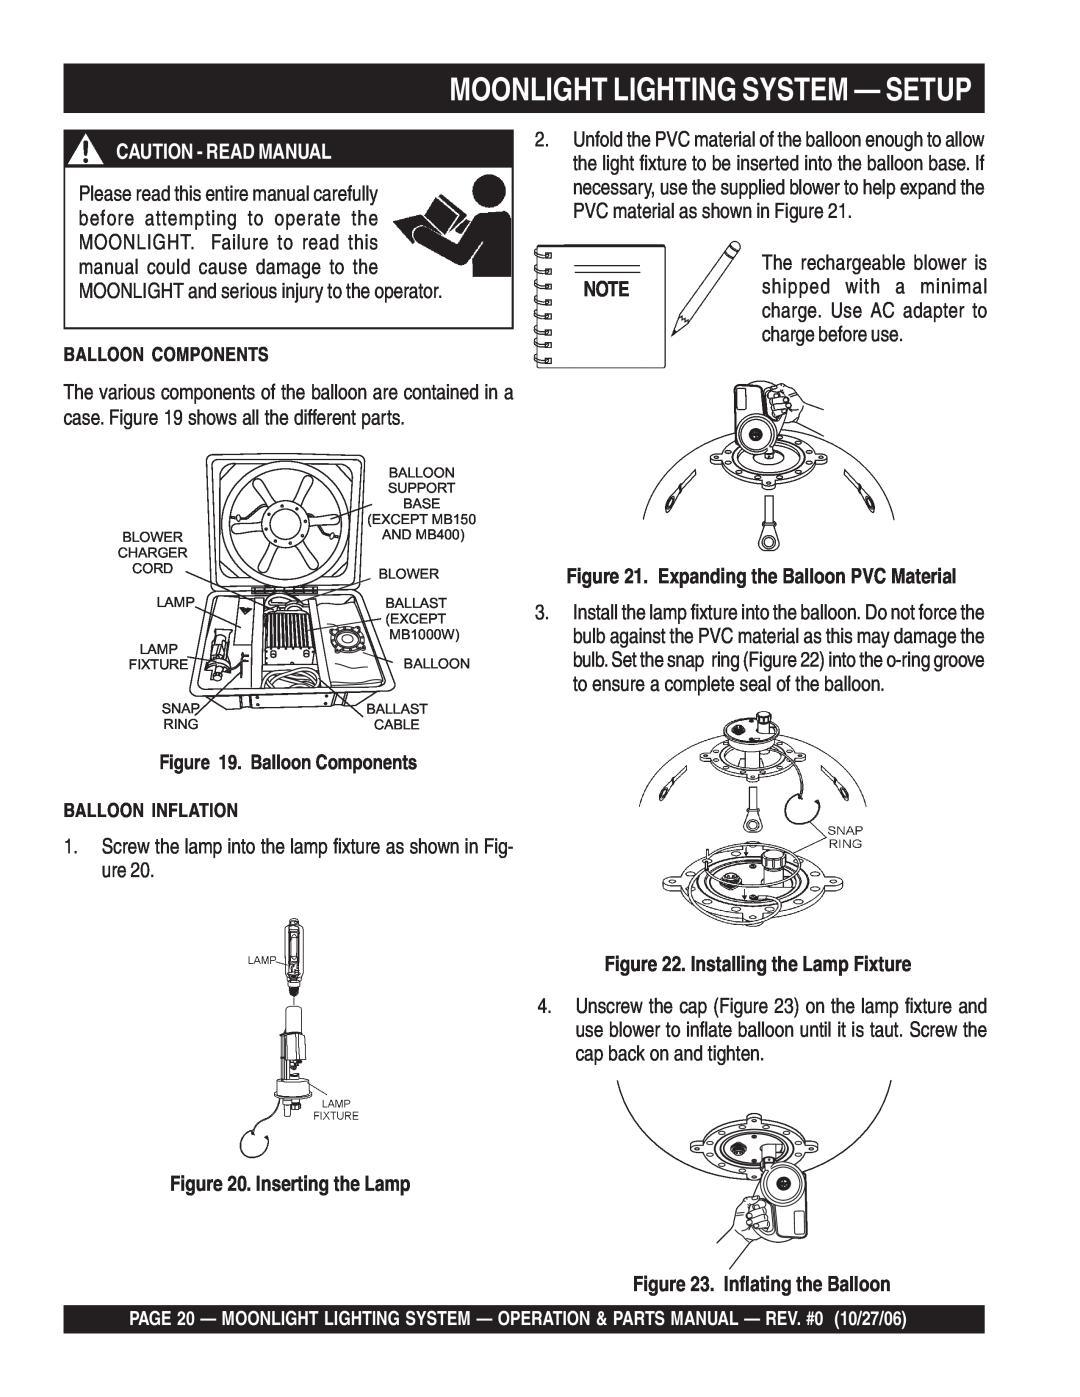 Multiquip MB400B, MB150 manual Moonlight Lighting System - Setup, Caution - Read Manual, Expanding the Balloon PVC Material 